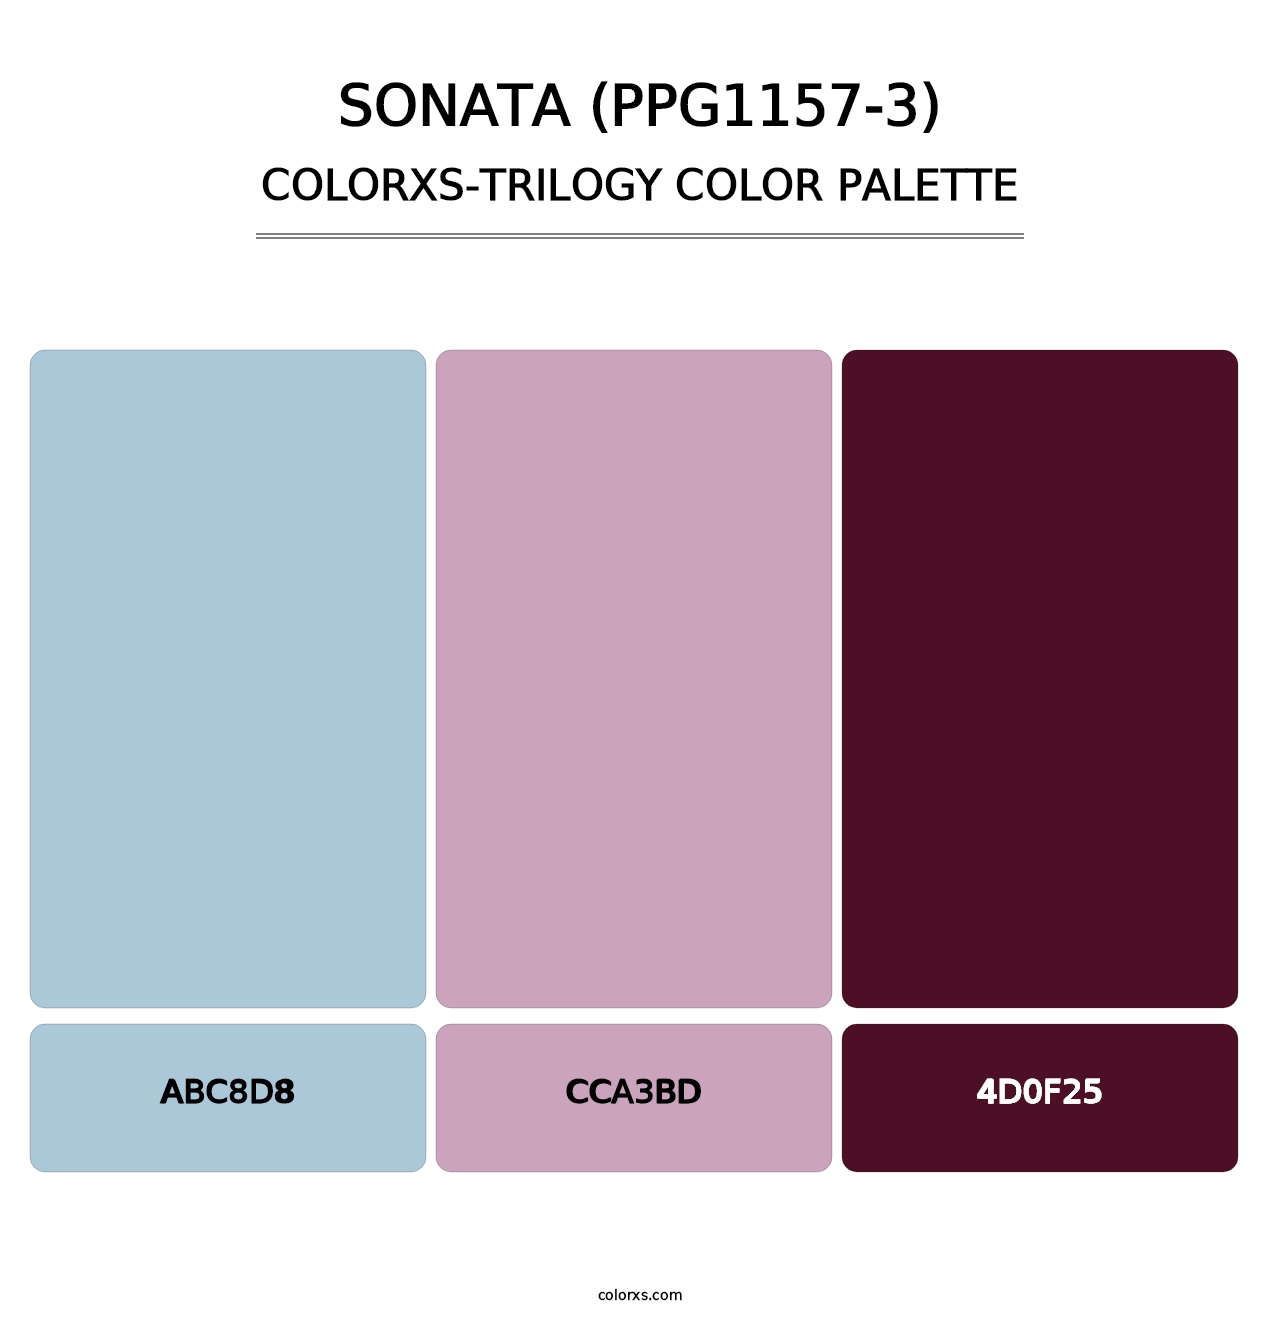 Sonata (PPG1157-3) - Colorxs Trilogy Palette